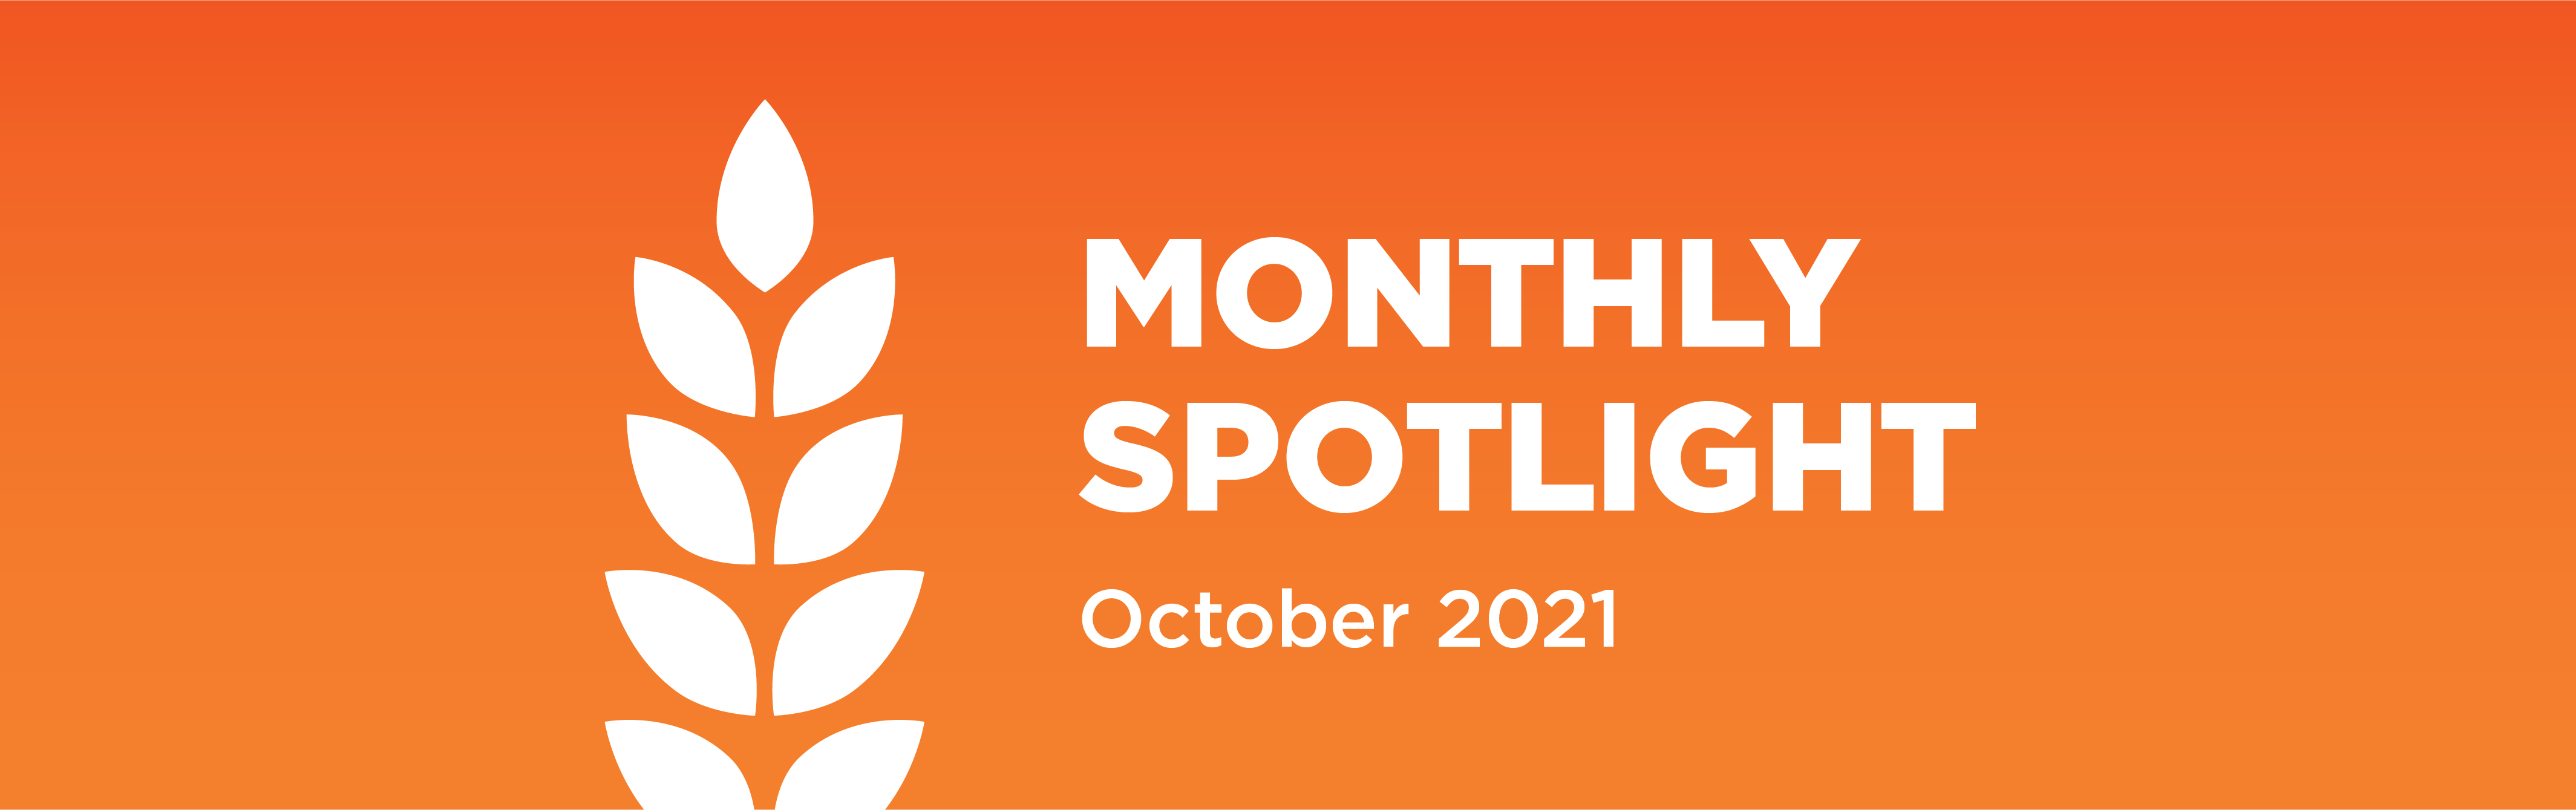 Feeding South Florida’s Monthly Spotlight: October